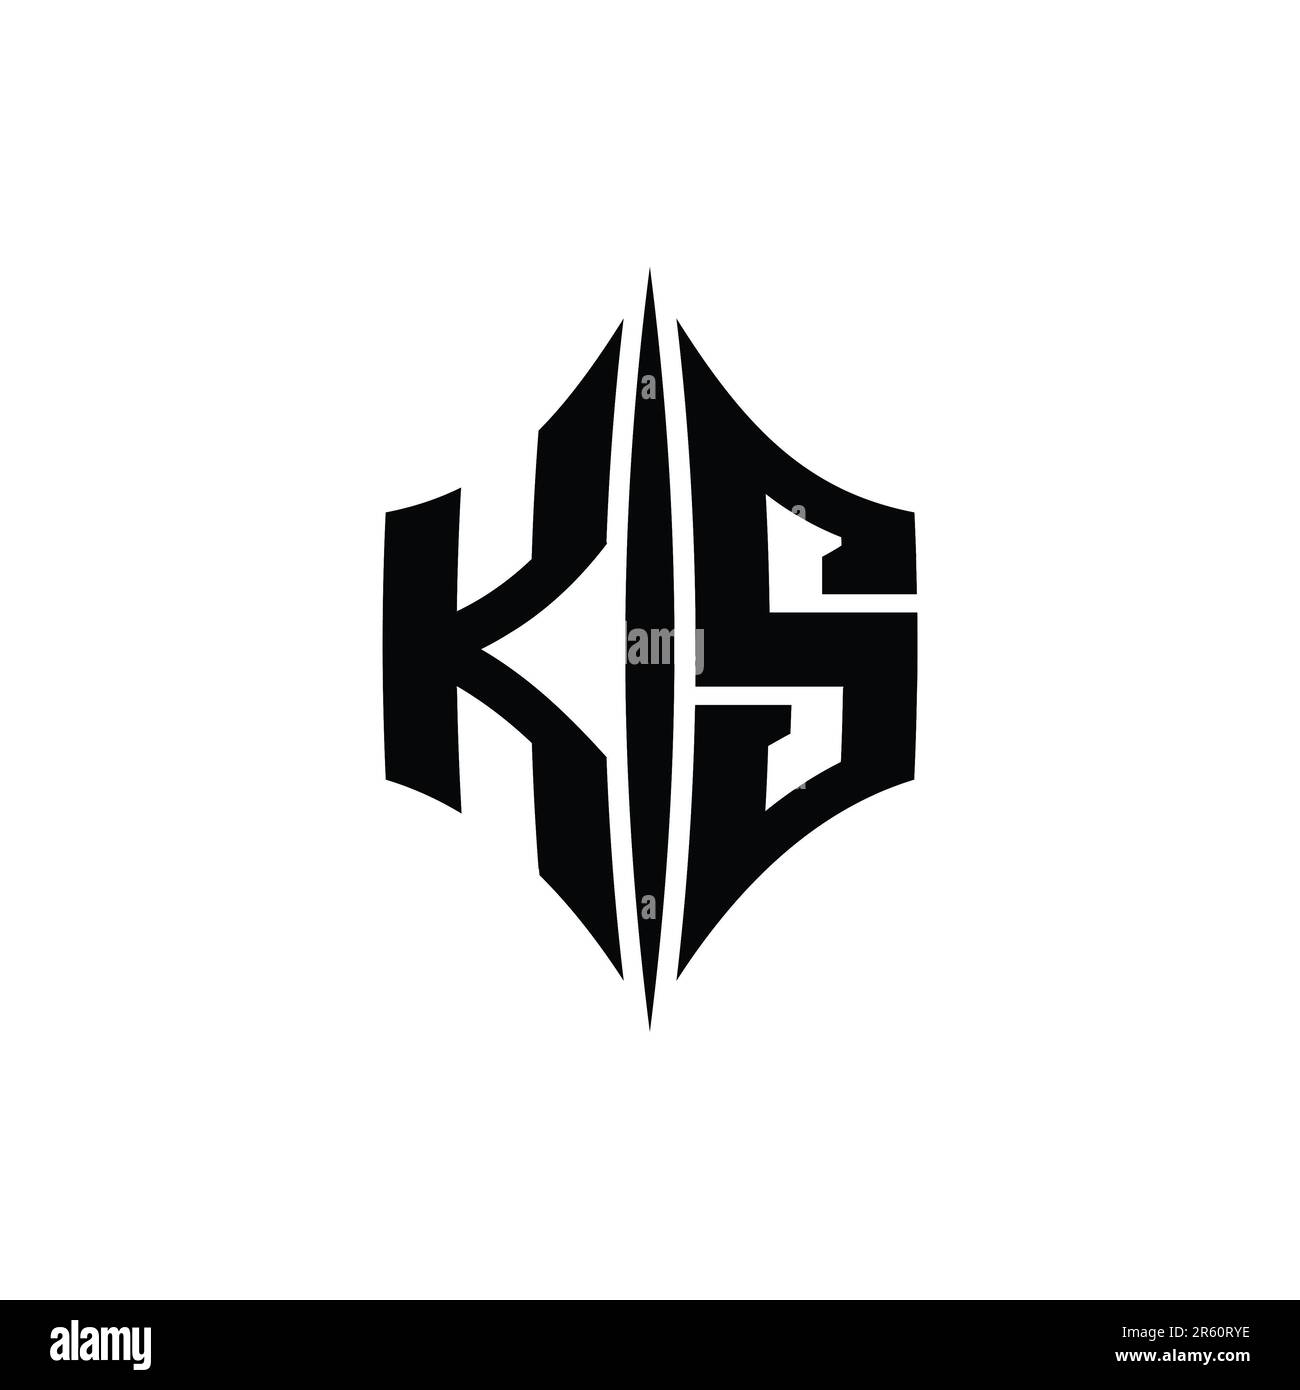 KS Letter Logo monogram hexagon diamond shape with piercing style ...